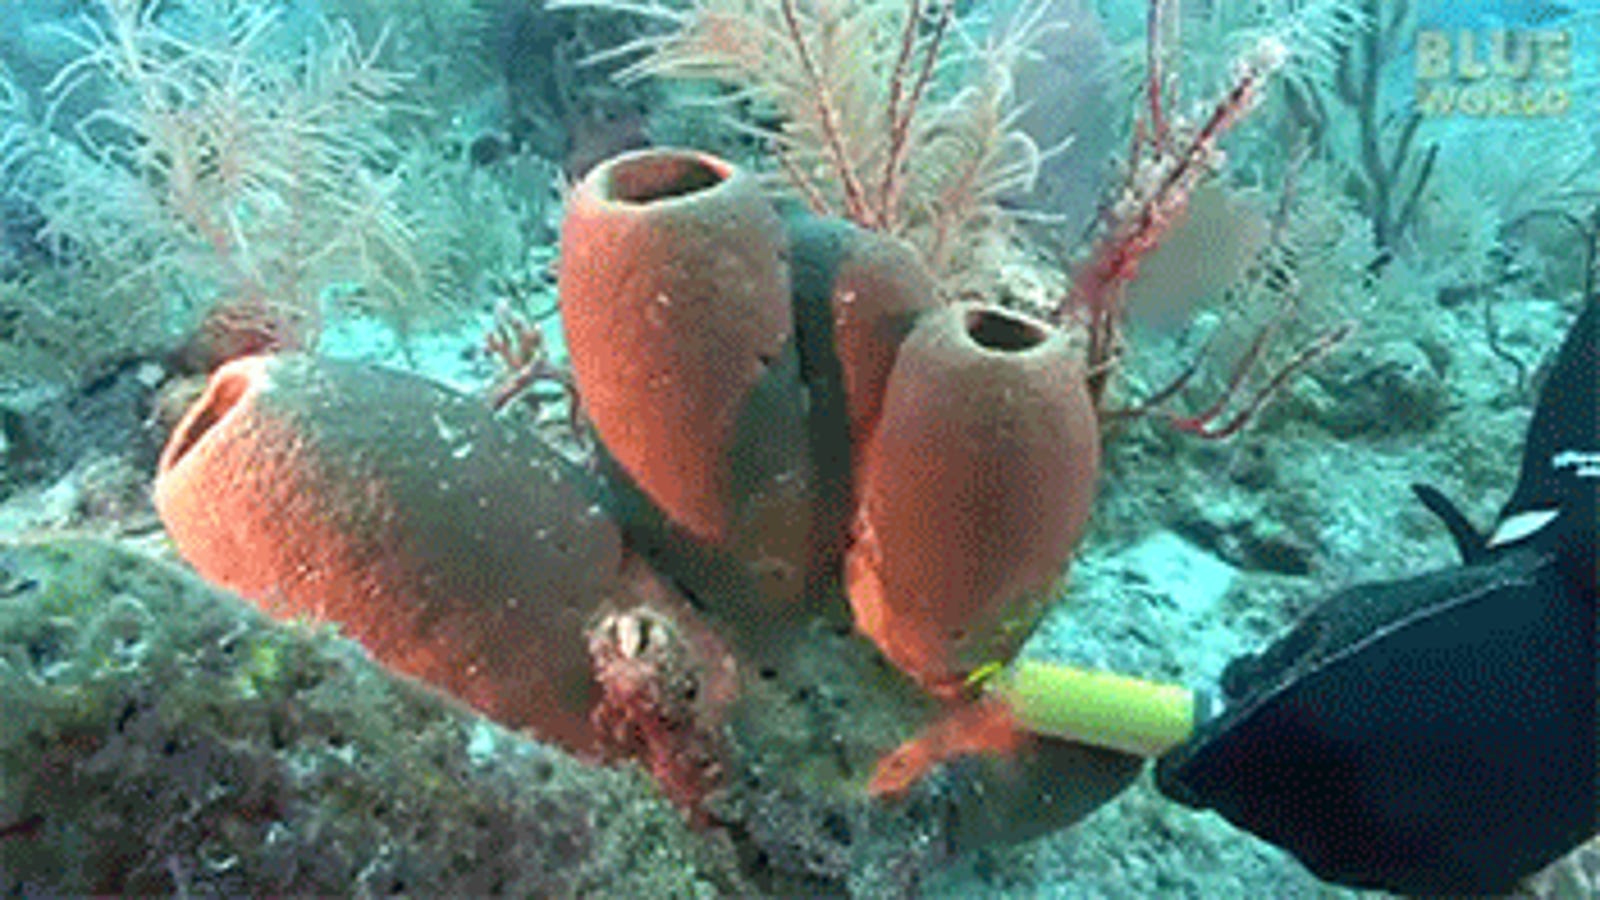 who does the sea sponge move